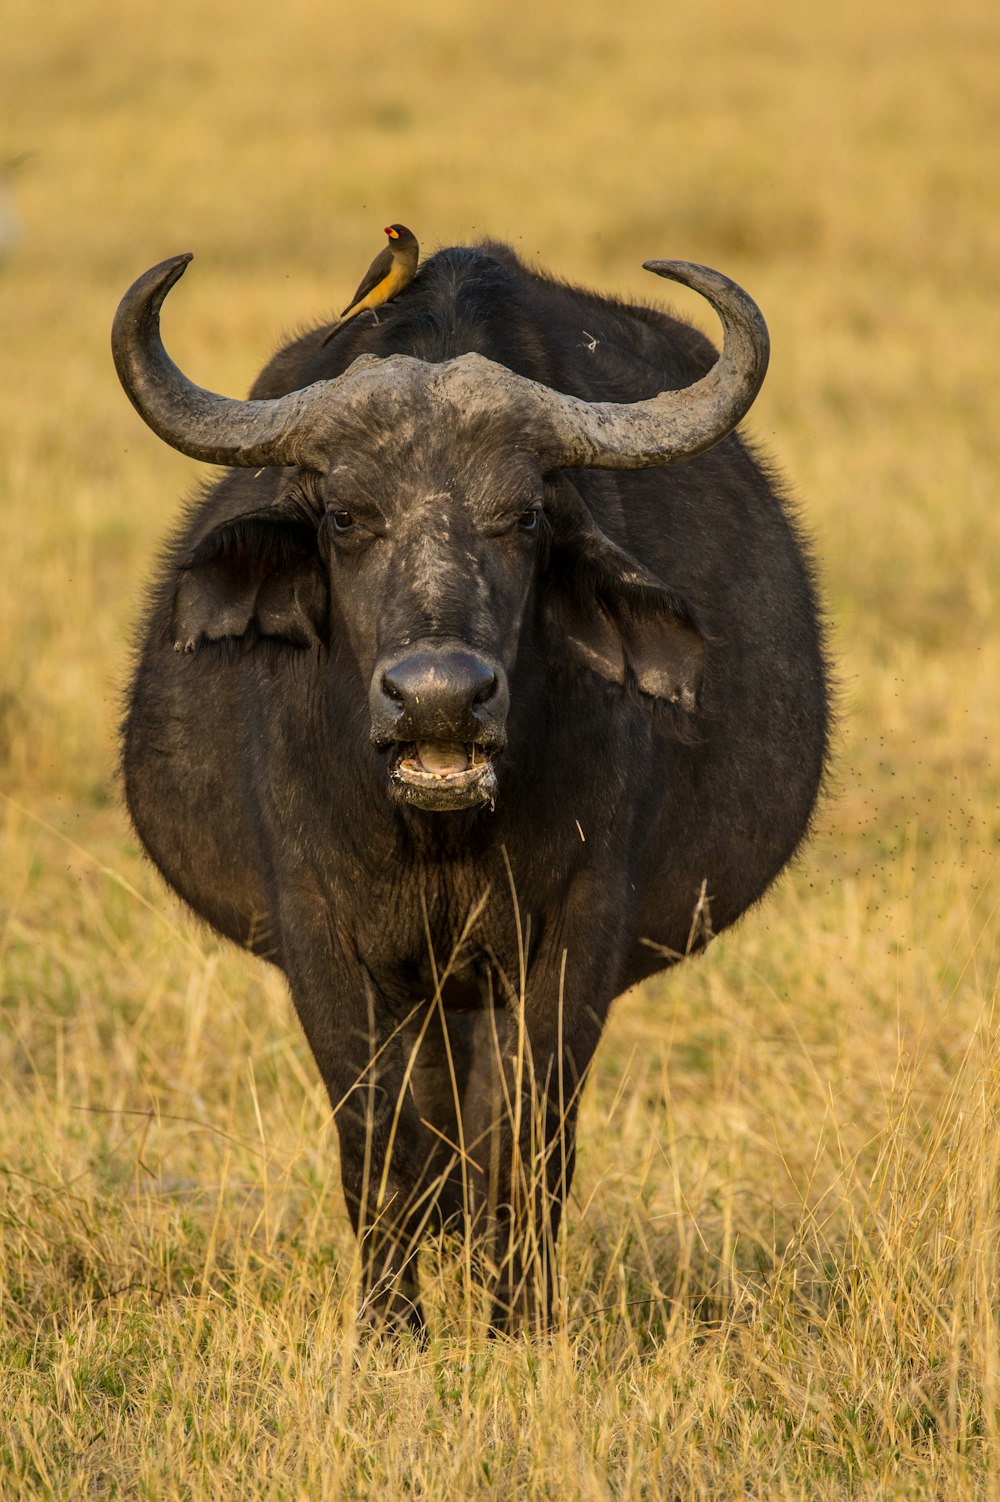 ubetalt Acquiesce chap black water buffalo on brown grass field during daytime photo – Free  Botswana Image on Unsplash